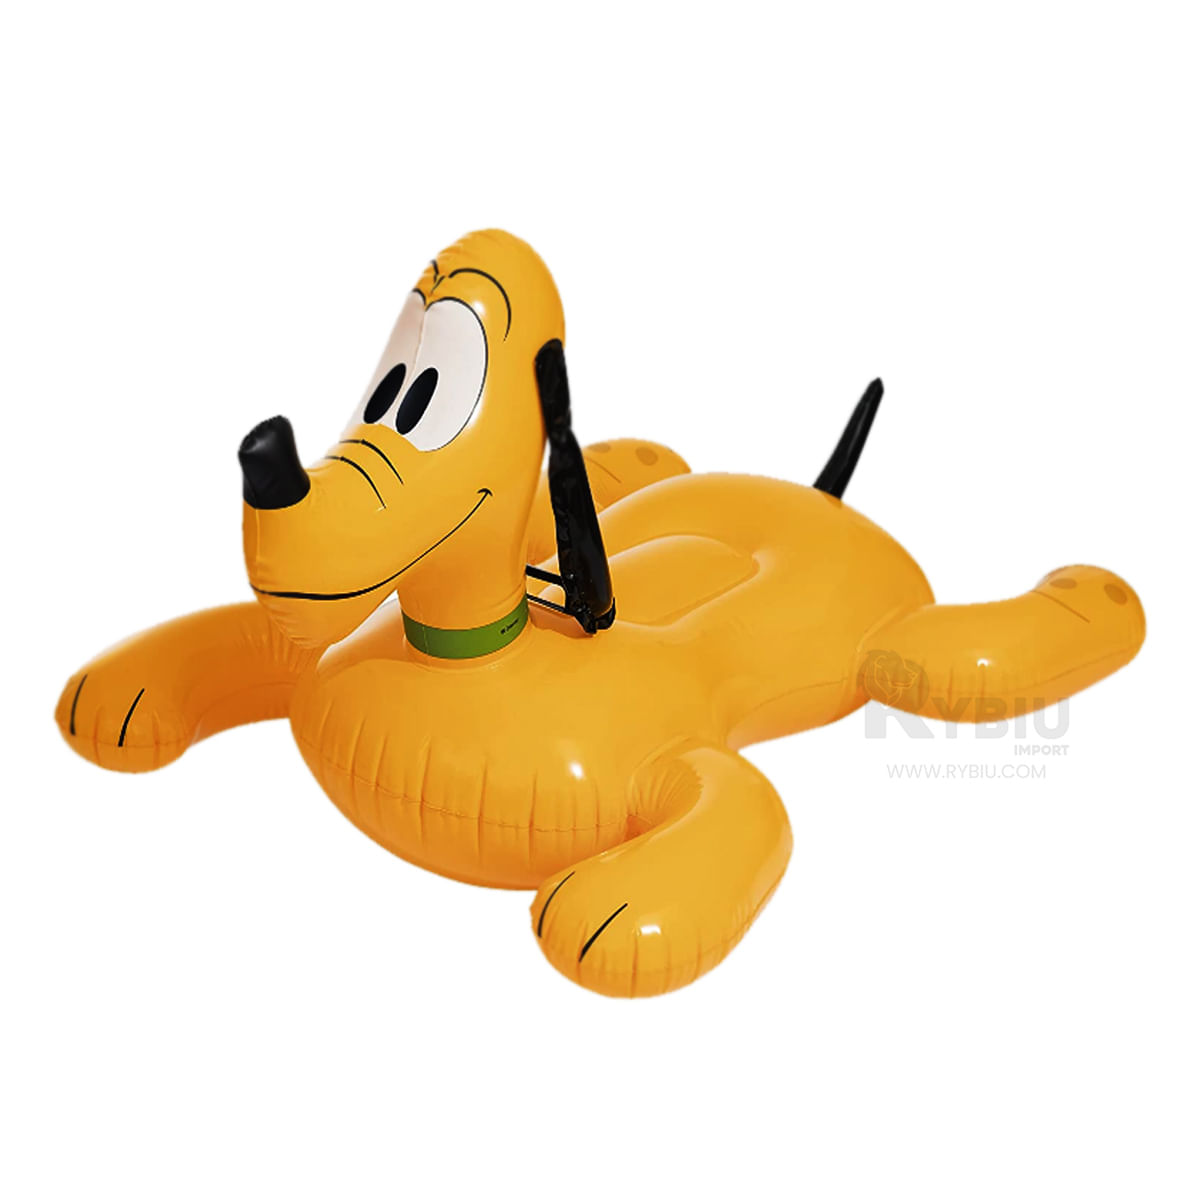 Flotador Inflable Montable Modelo Perro Pluto